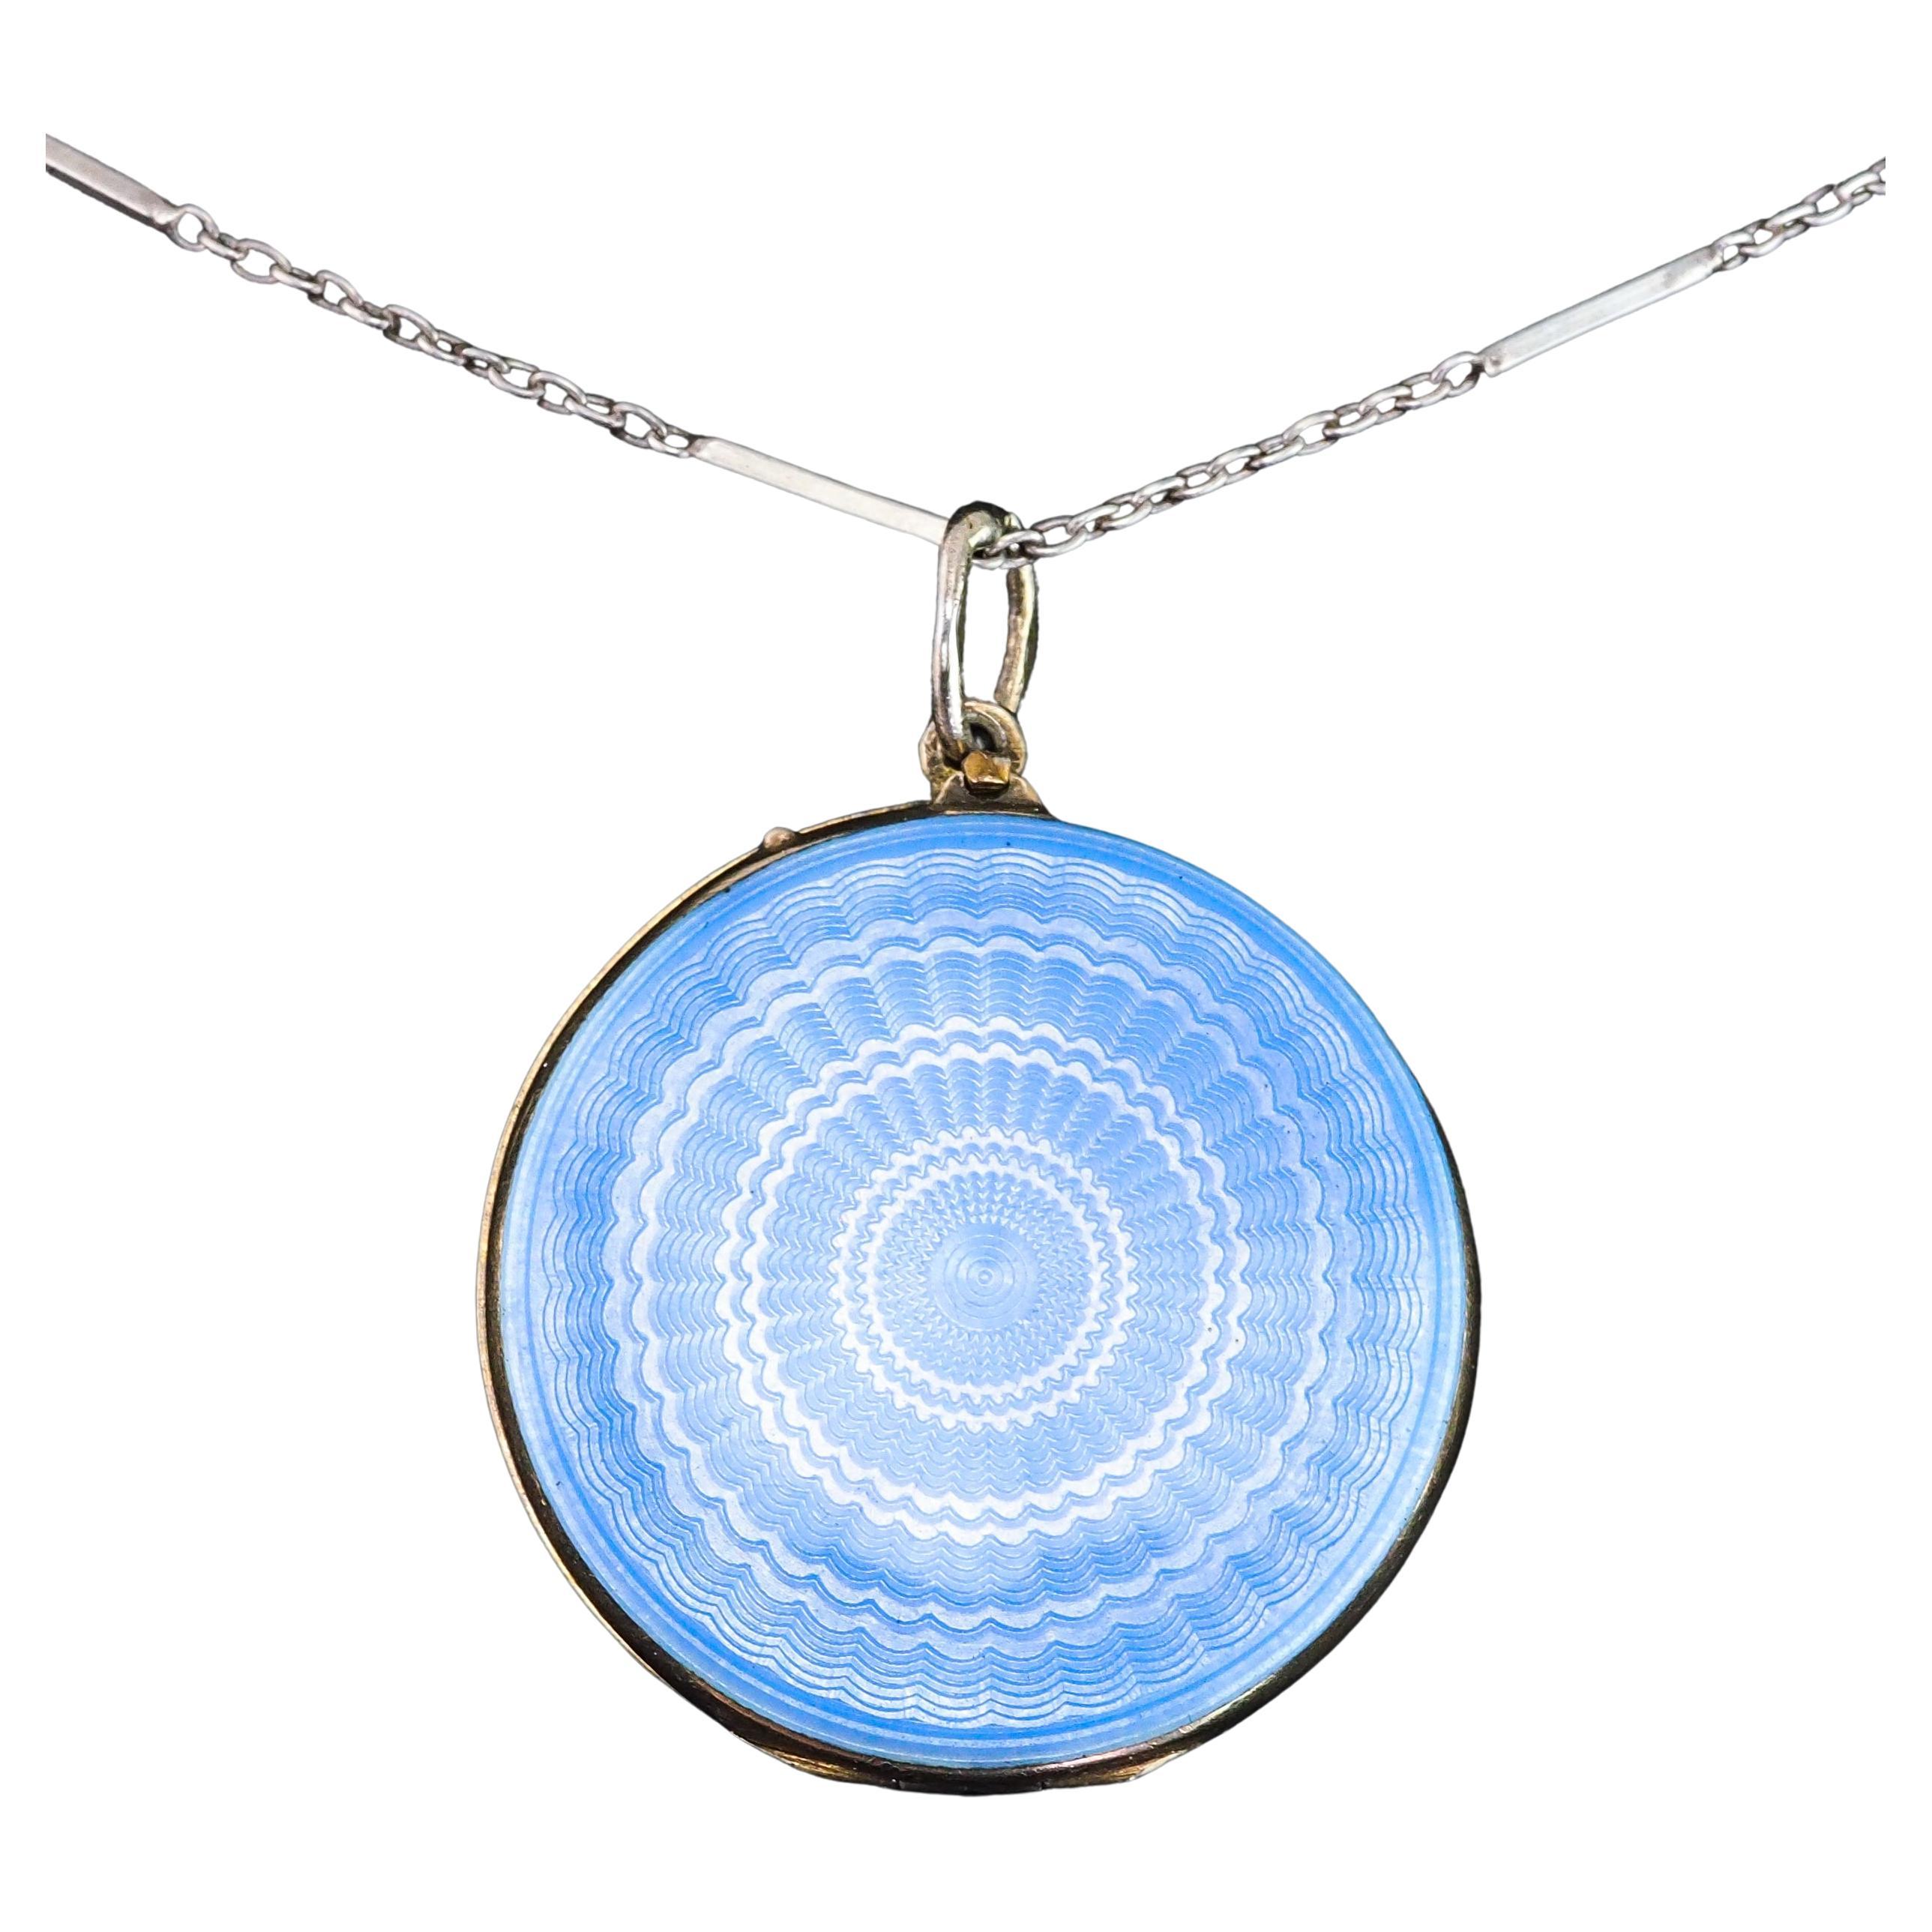 Antique Norwegian Blue Guilloche Enamel Pendant Necklace Locket - Marius Hammer For Sale